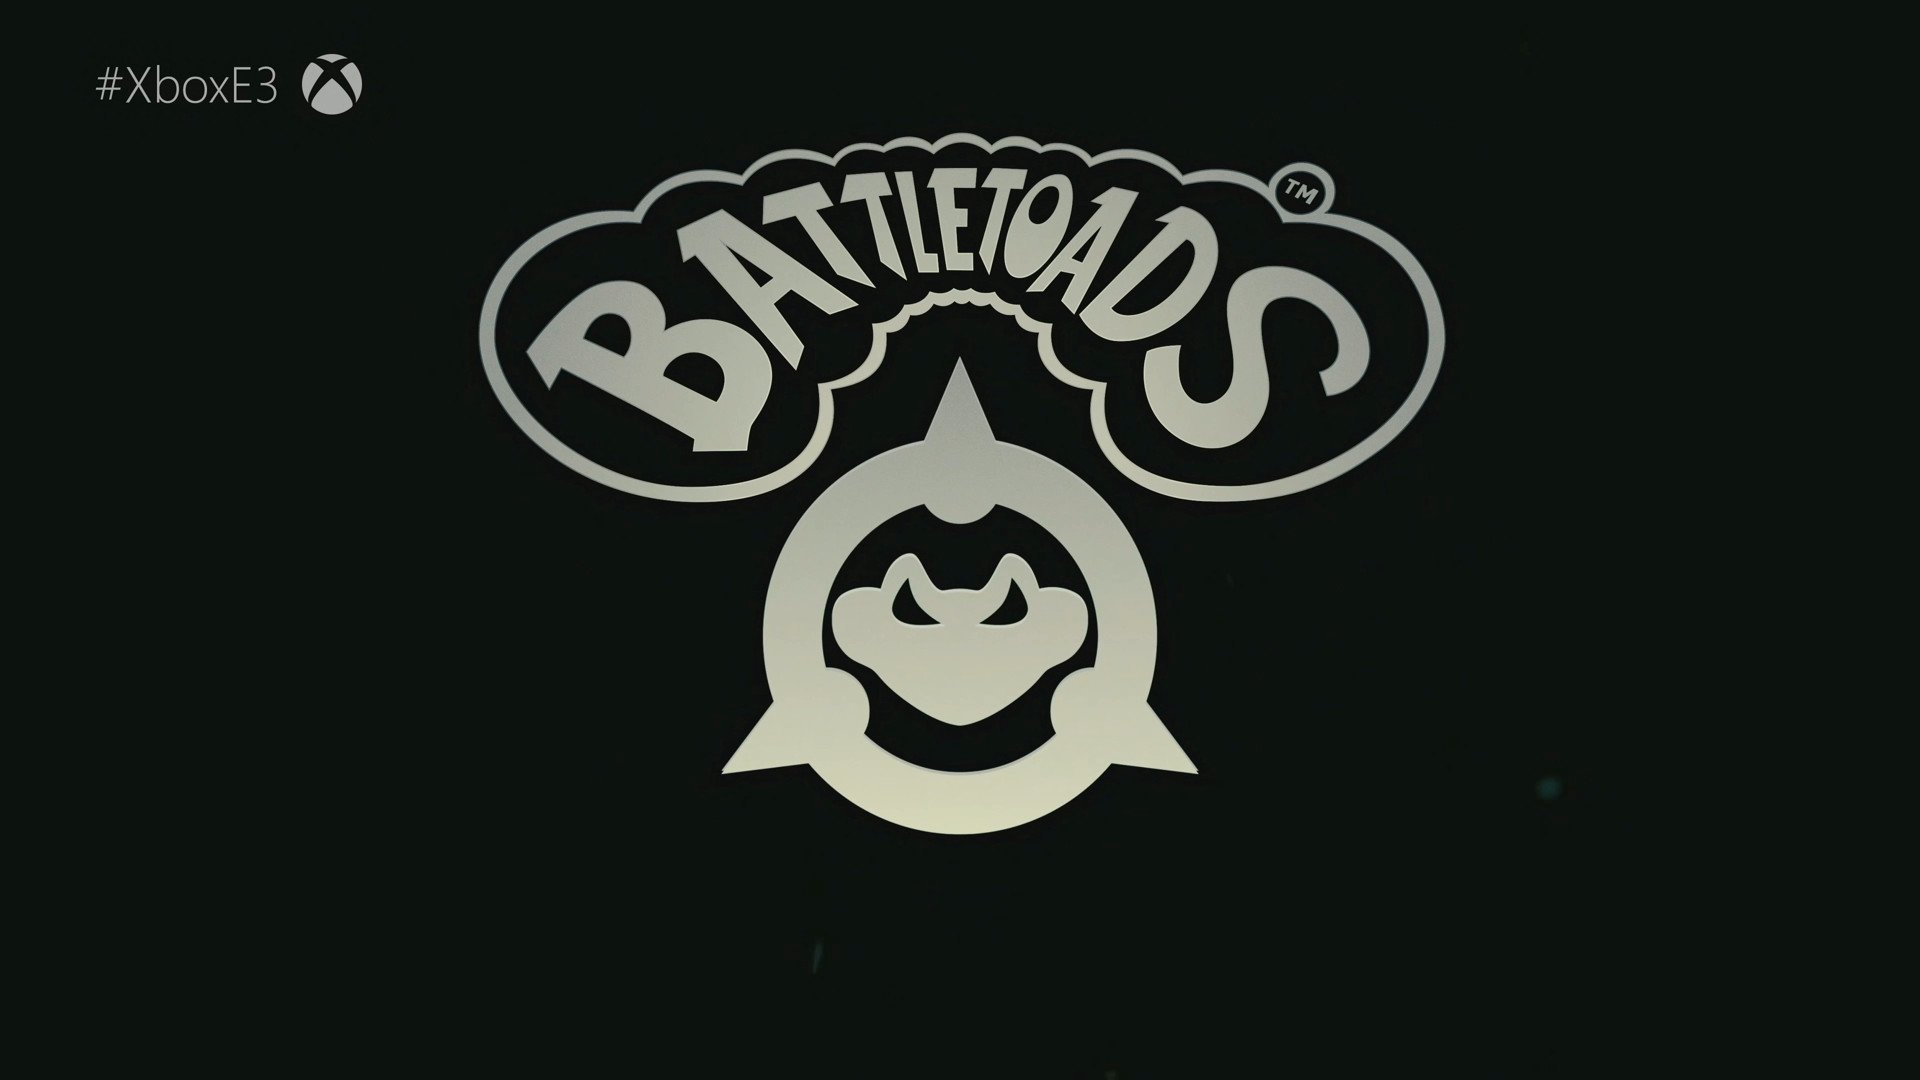 battletoads-logo-e3-2018.jpg